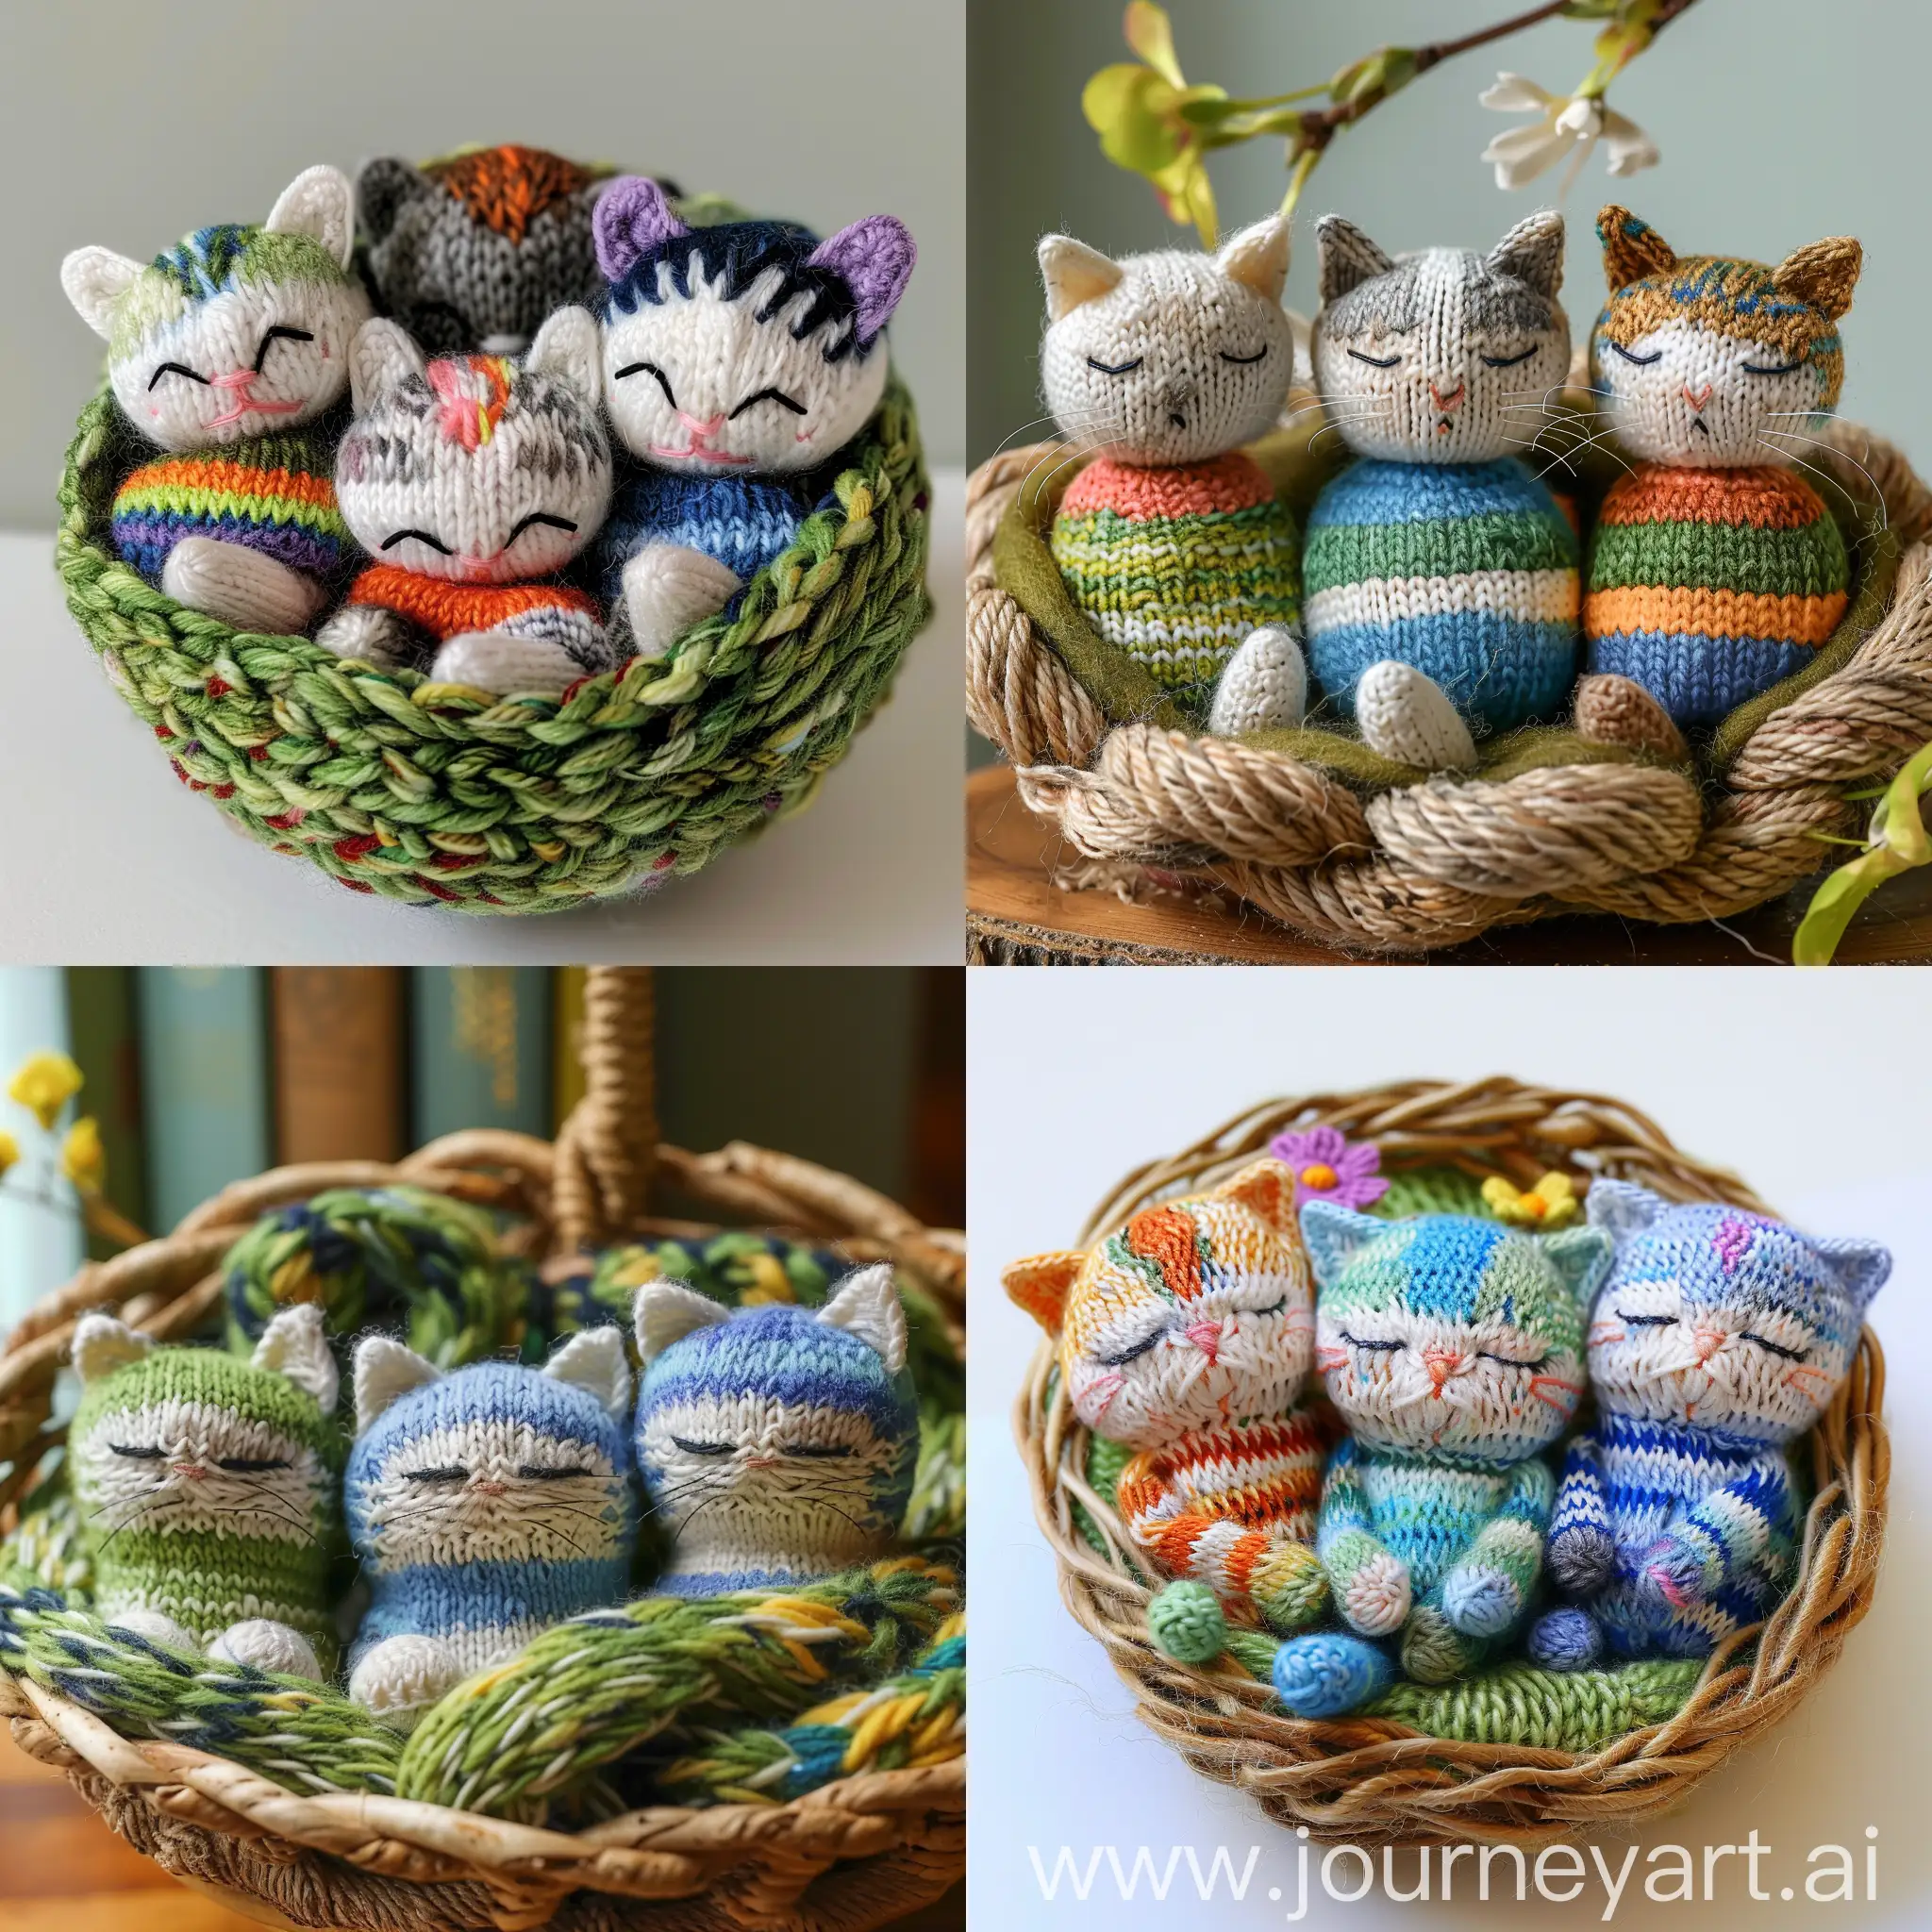 3 awe fashion knitted kittens in wool nest. 1 kitten is knitted in green white stripes. 1 kitten is knitted in blue white stripes. 1 kitten is knitted in rainbow dots